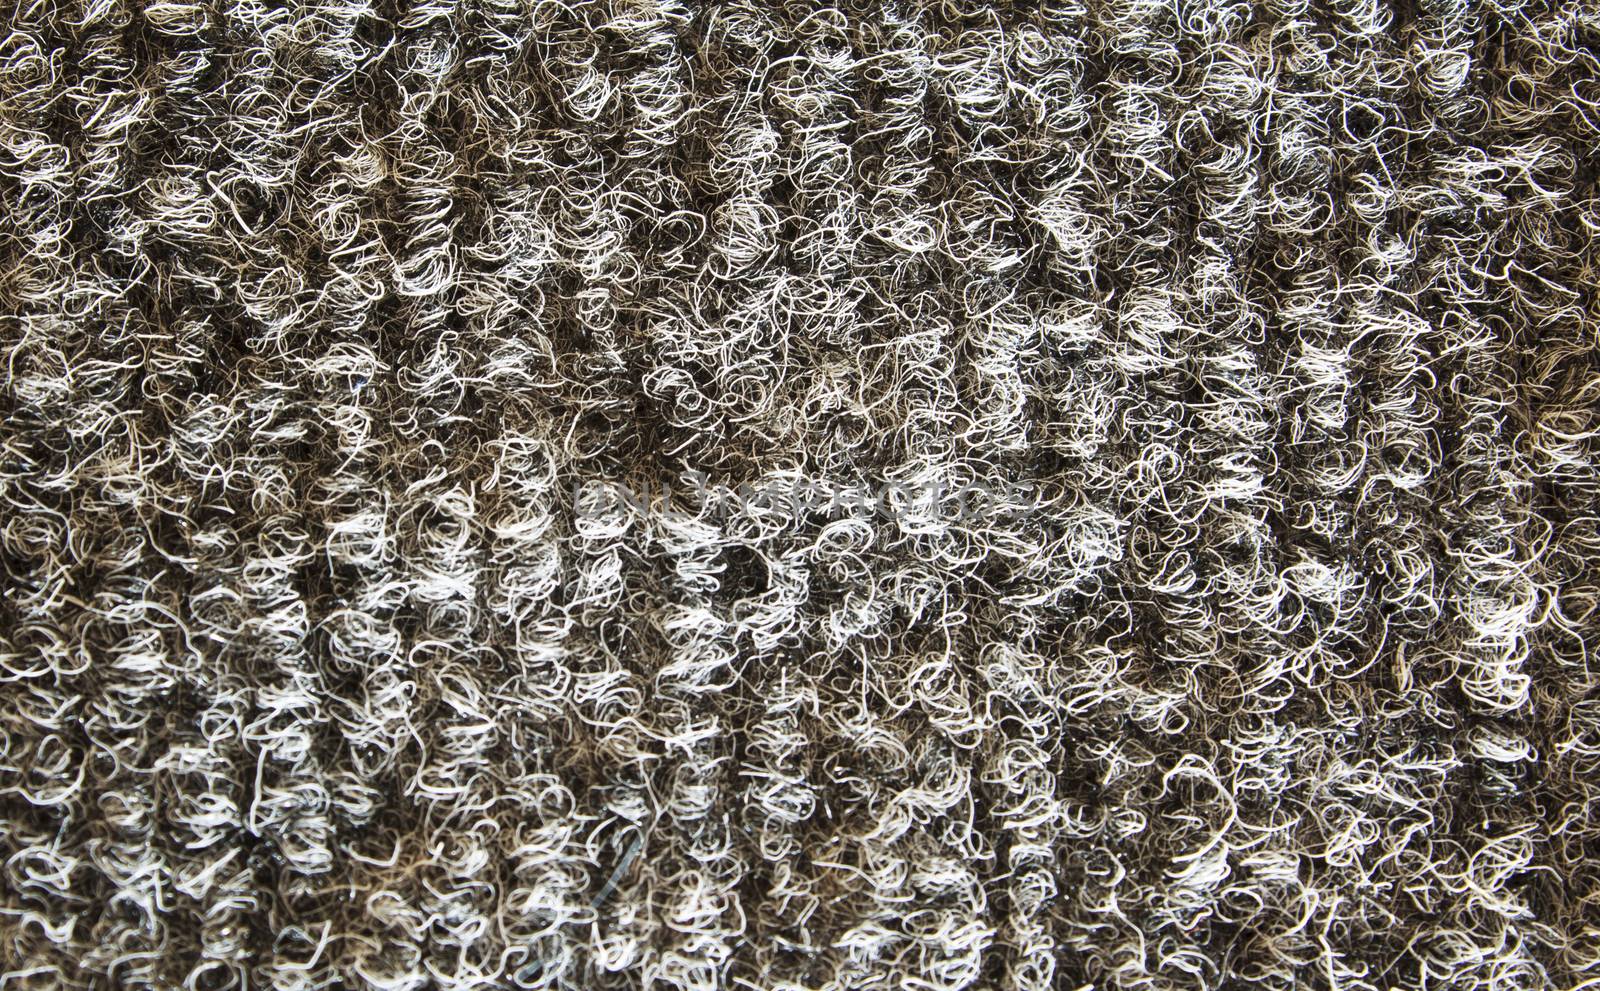 Closeup shot of rough looking gray carpet.